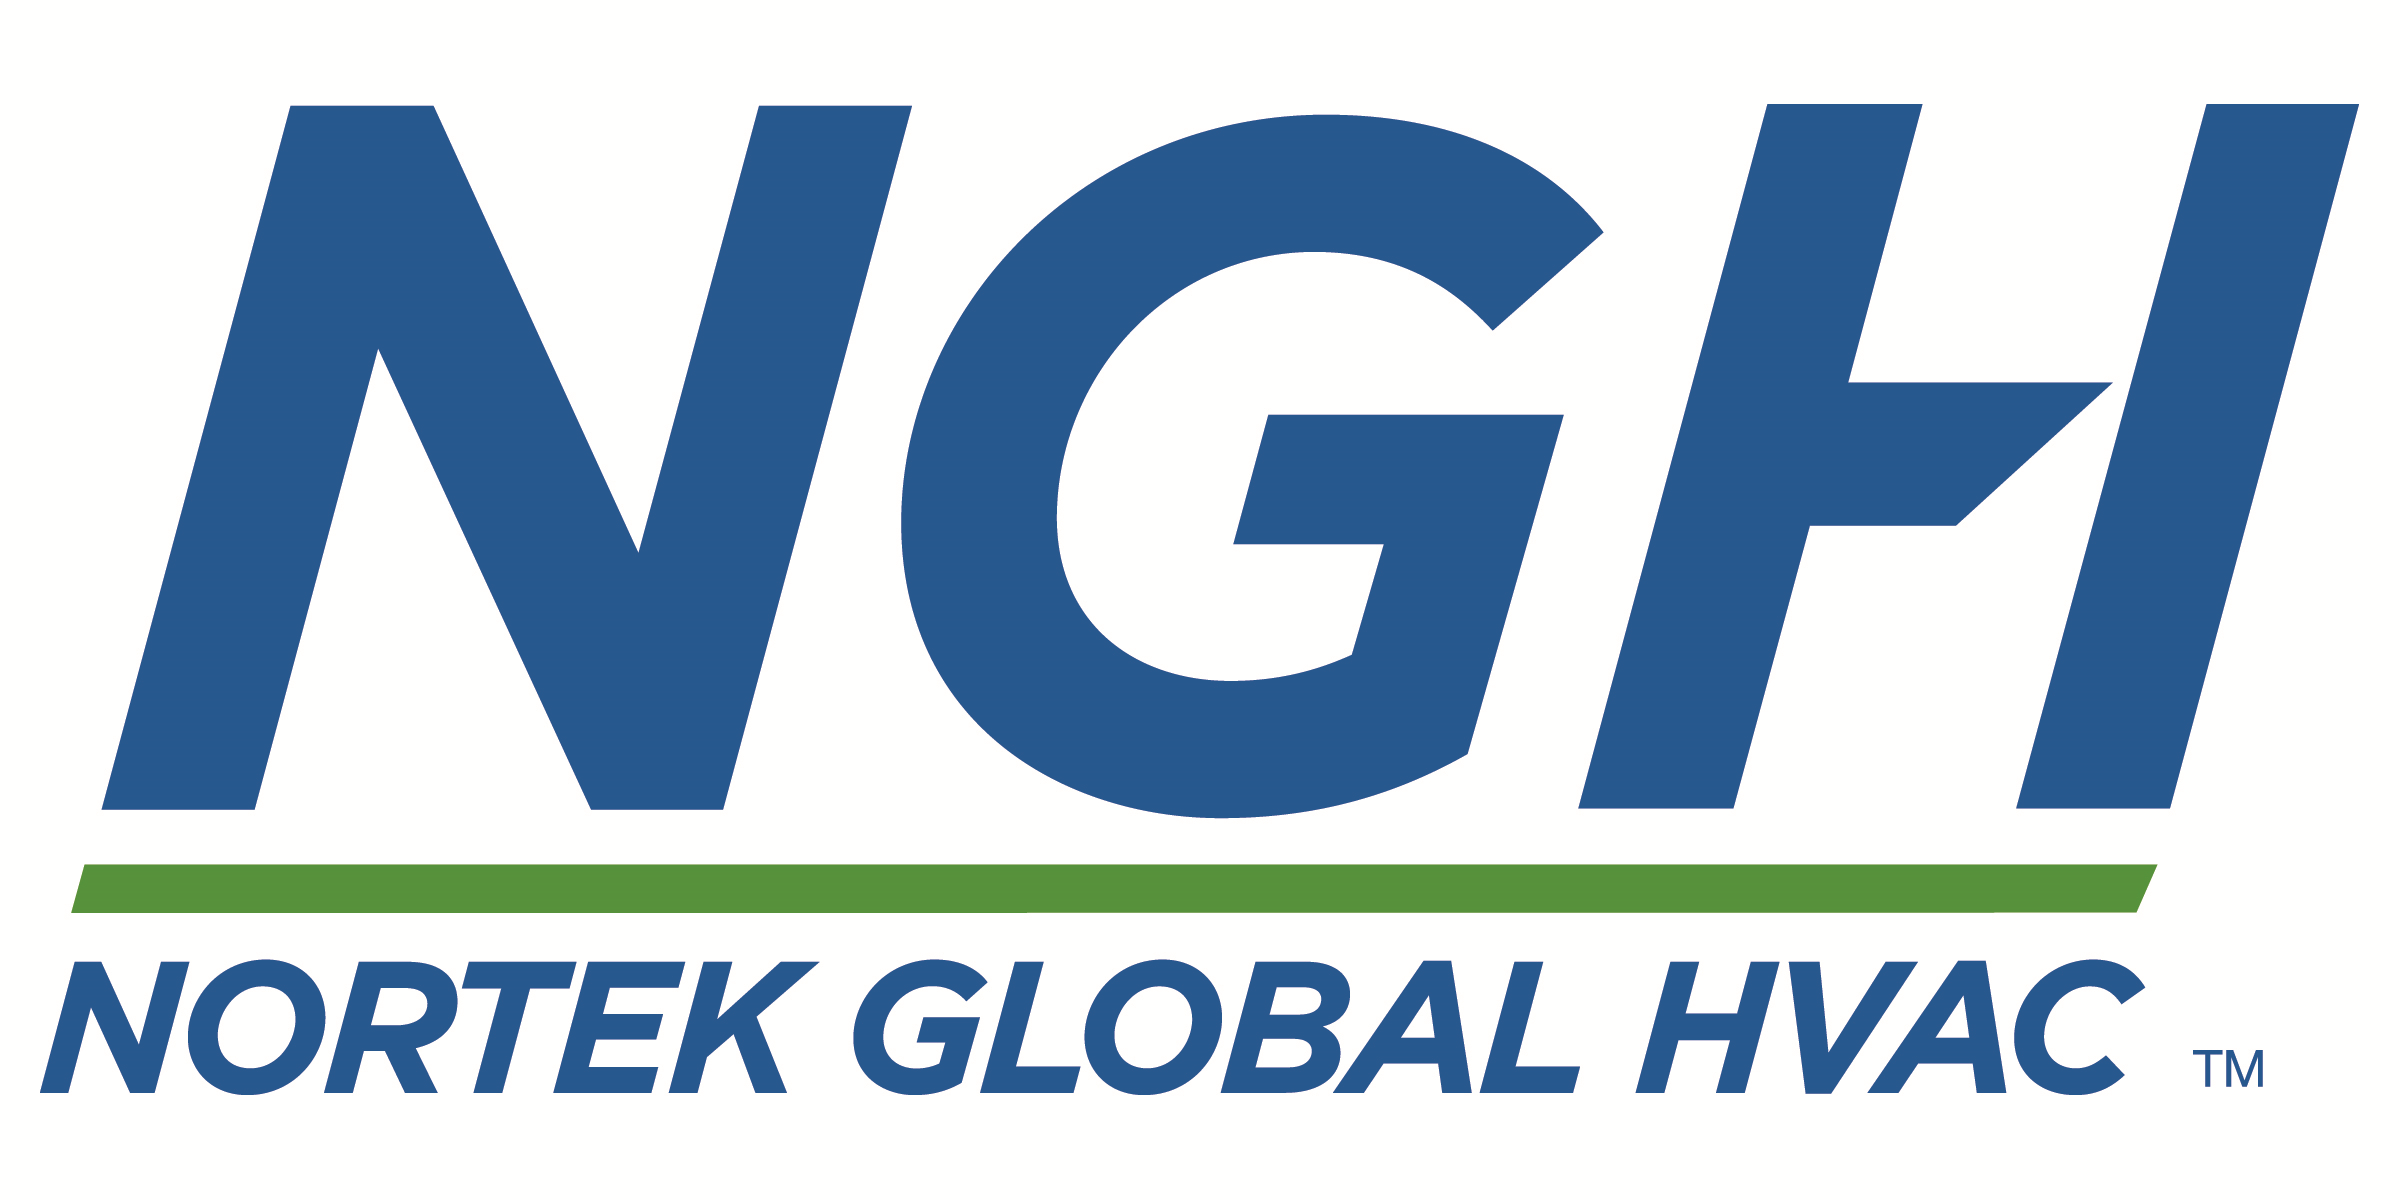 Nortek Global HVAC logo